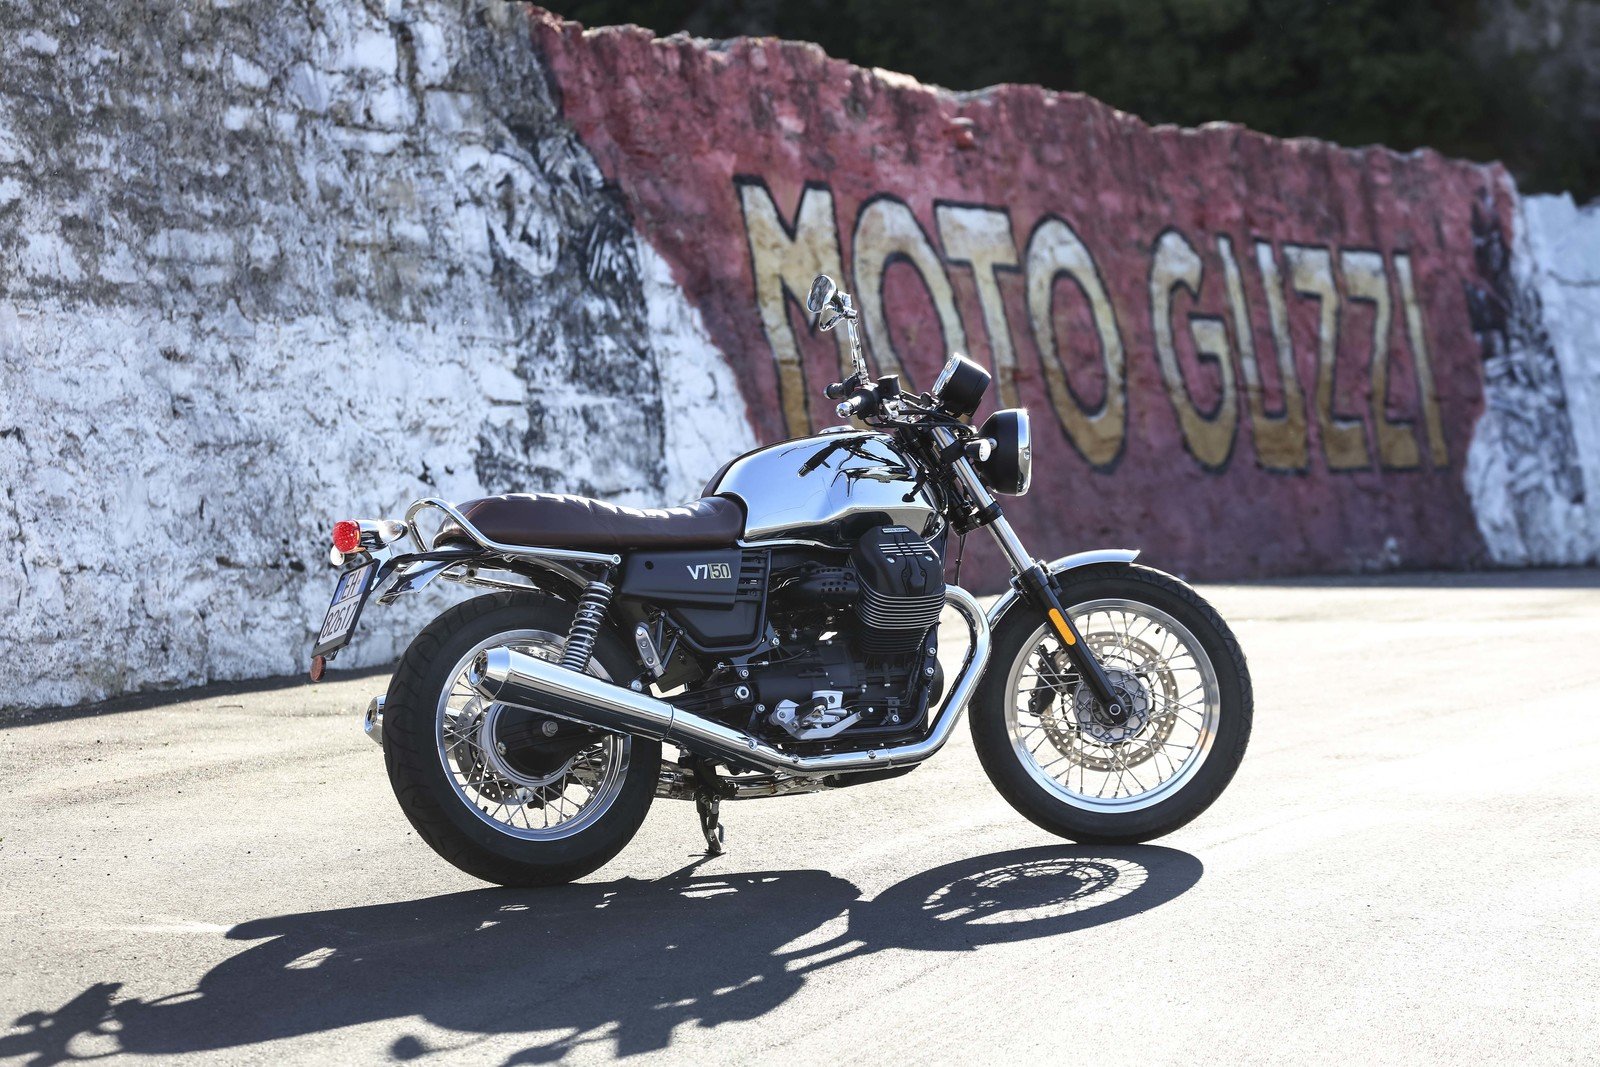 Moto Guzzo Wallpapers